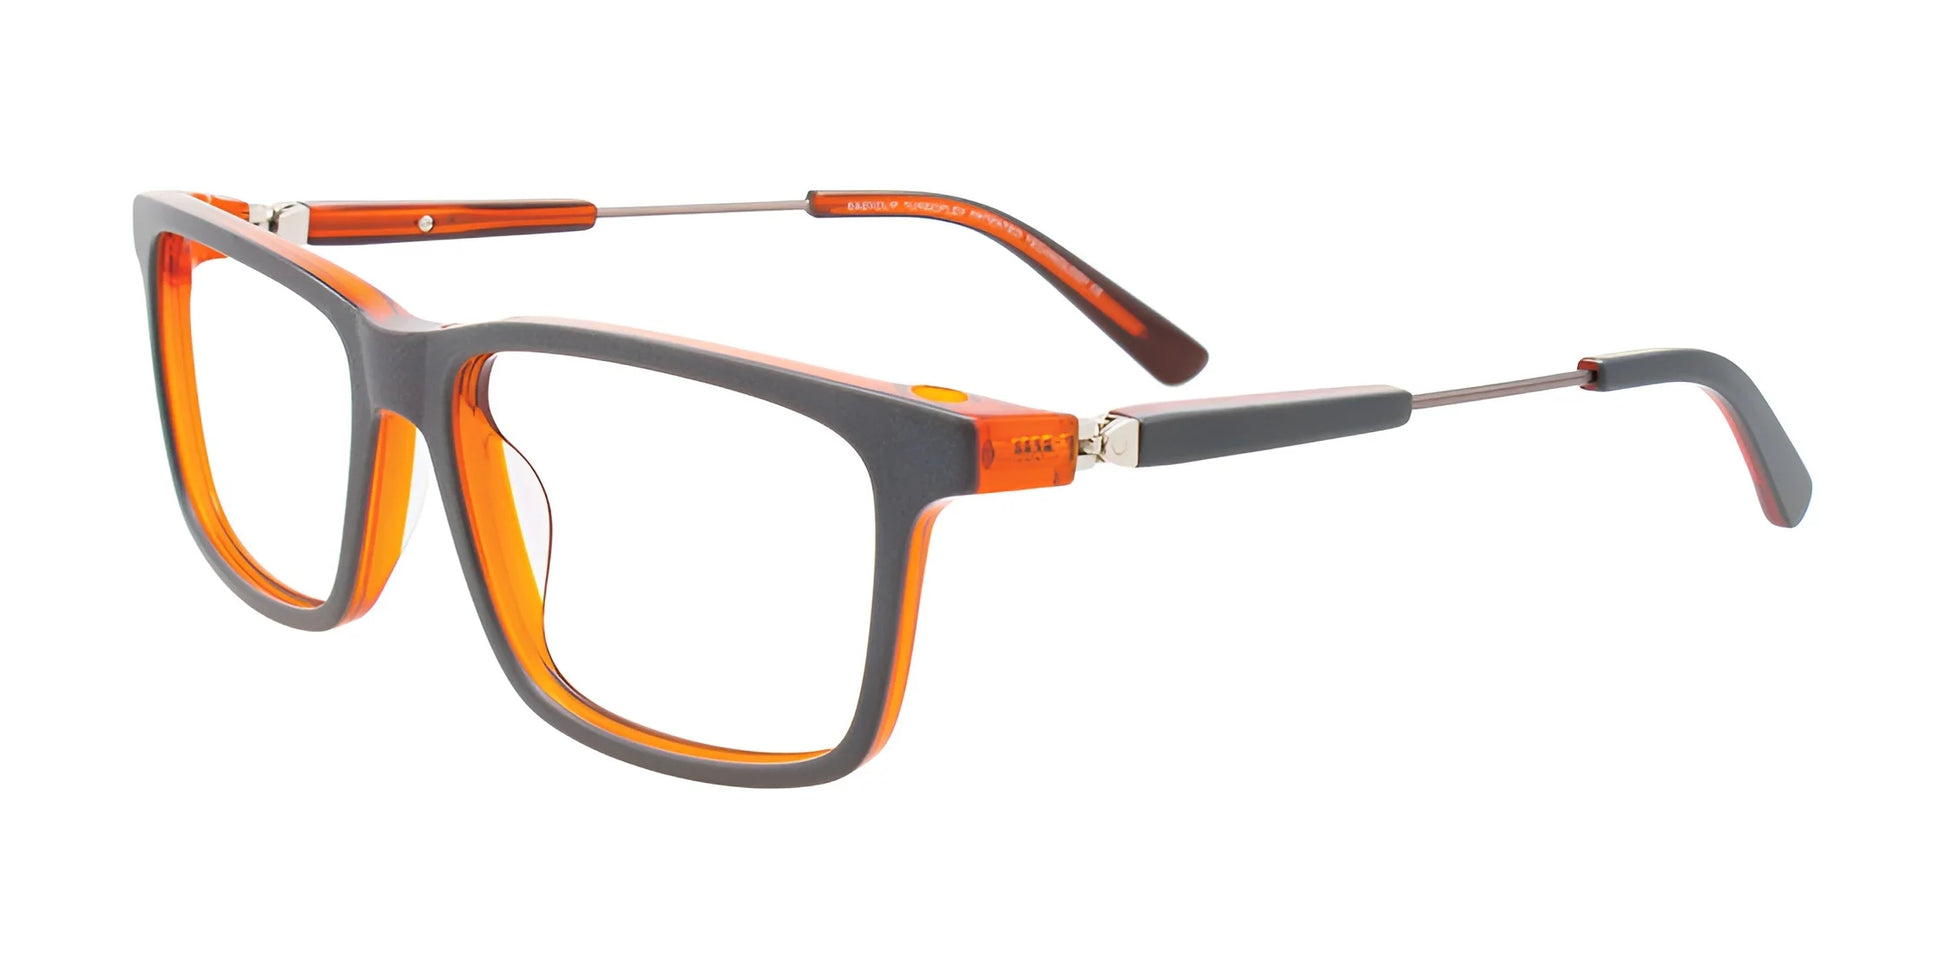 EasyClip EC599 Eyeglasses Matt Grey & Cryst Orange / Matt Grey & Cryst Orange